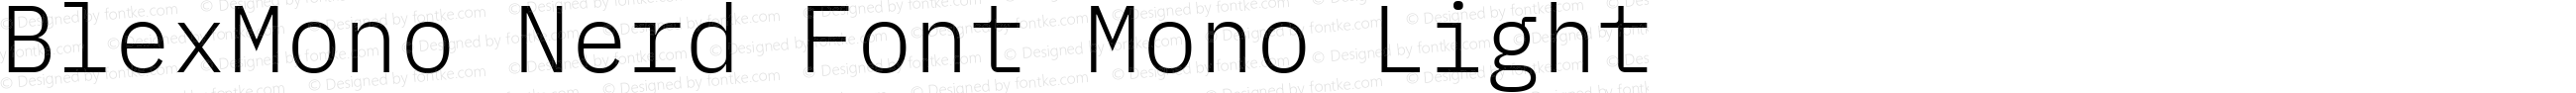 Blex Mono Light Nerd Font Complete Mono